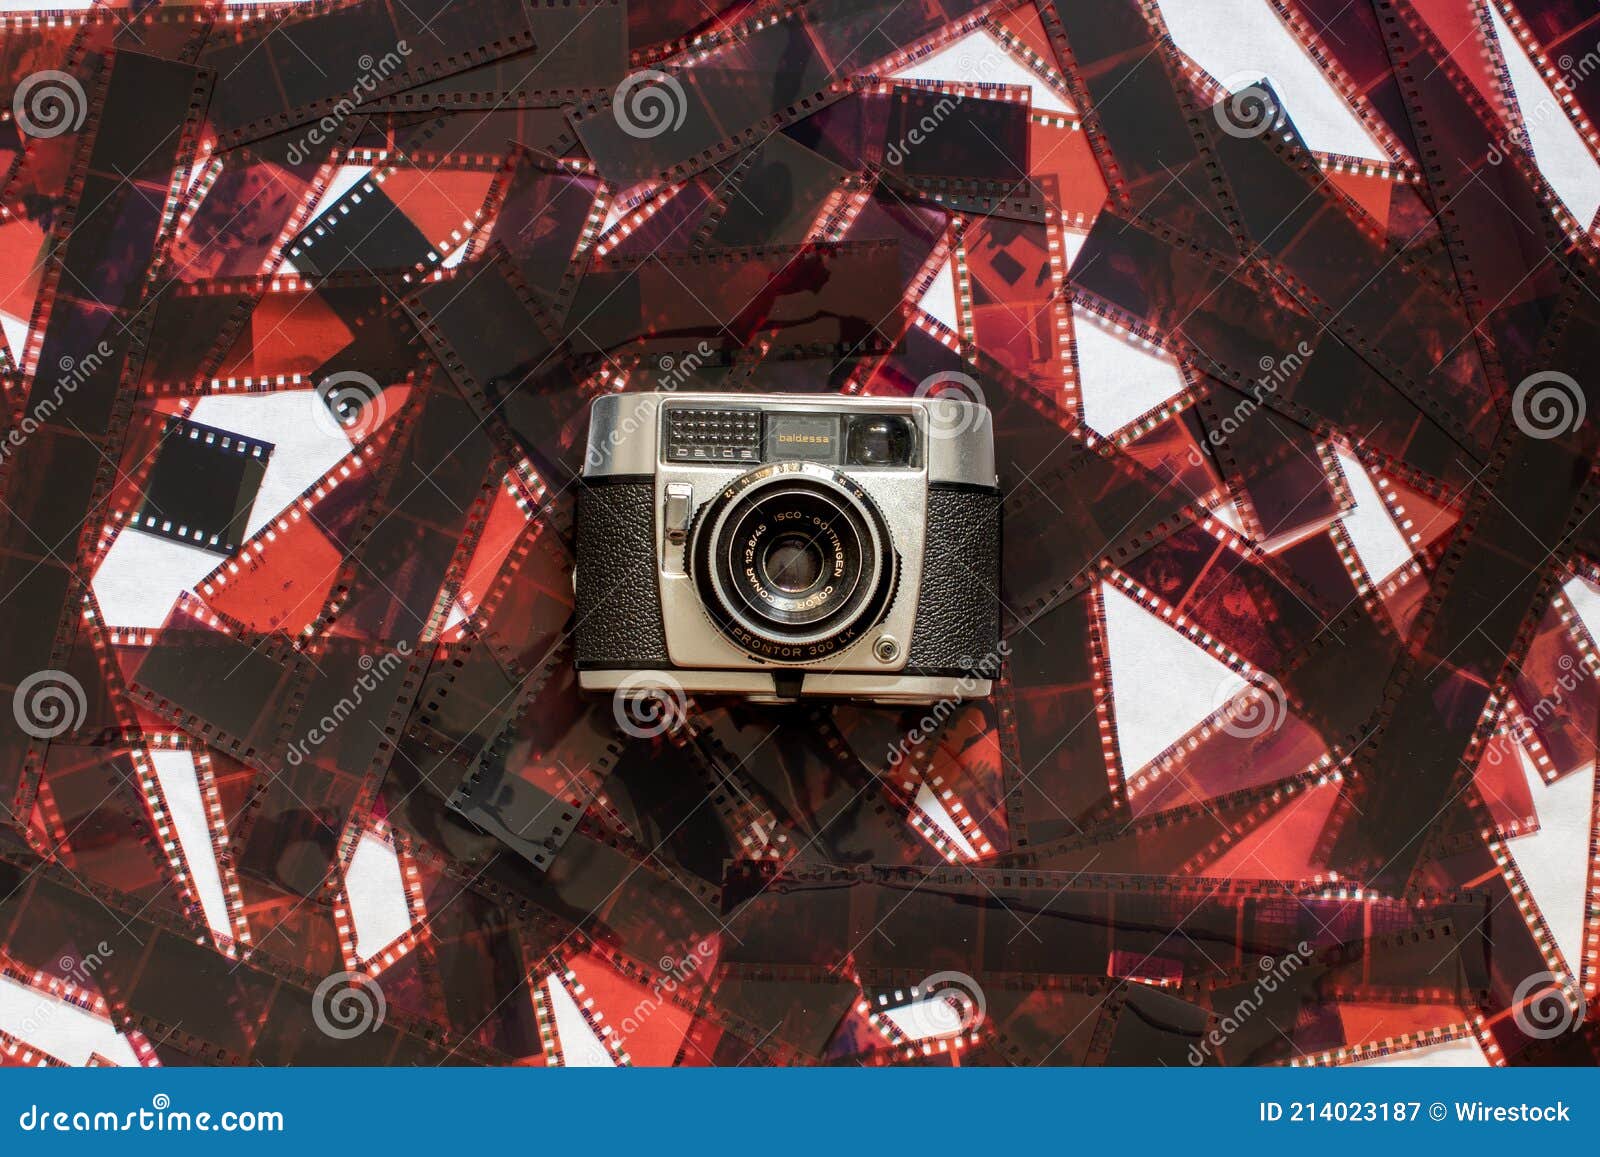 analog camera on film background